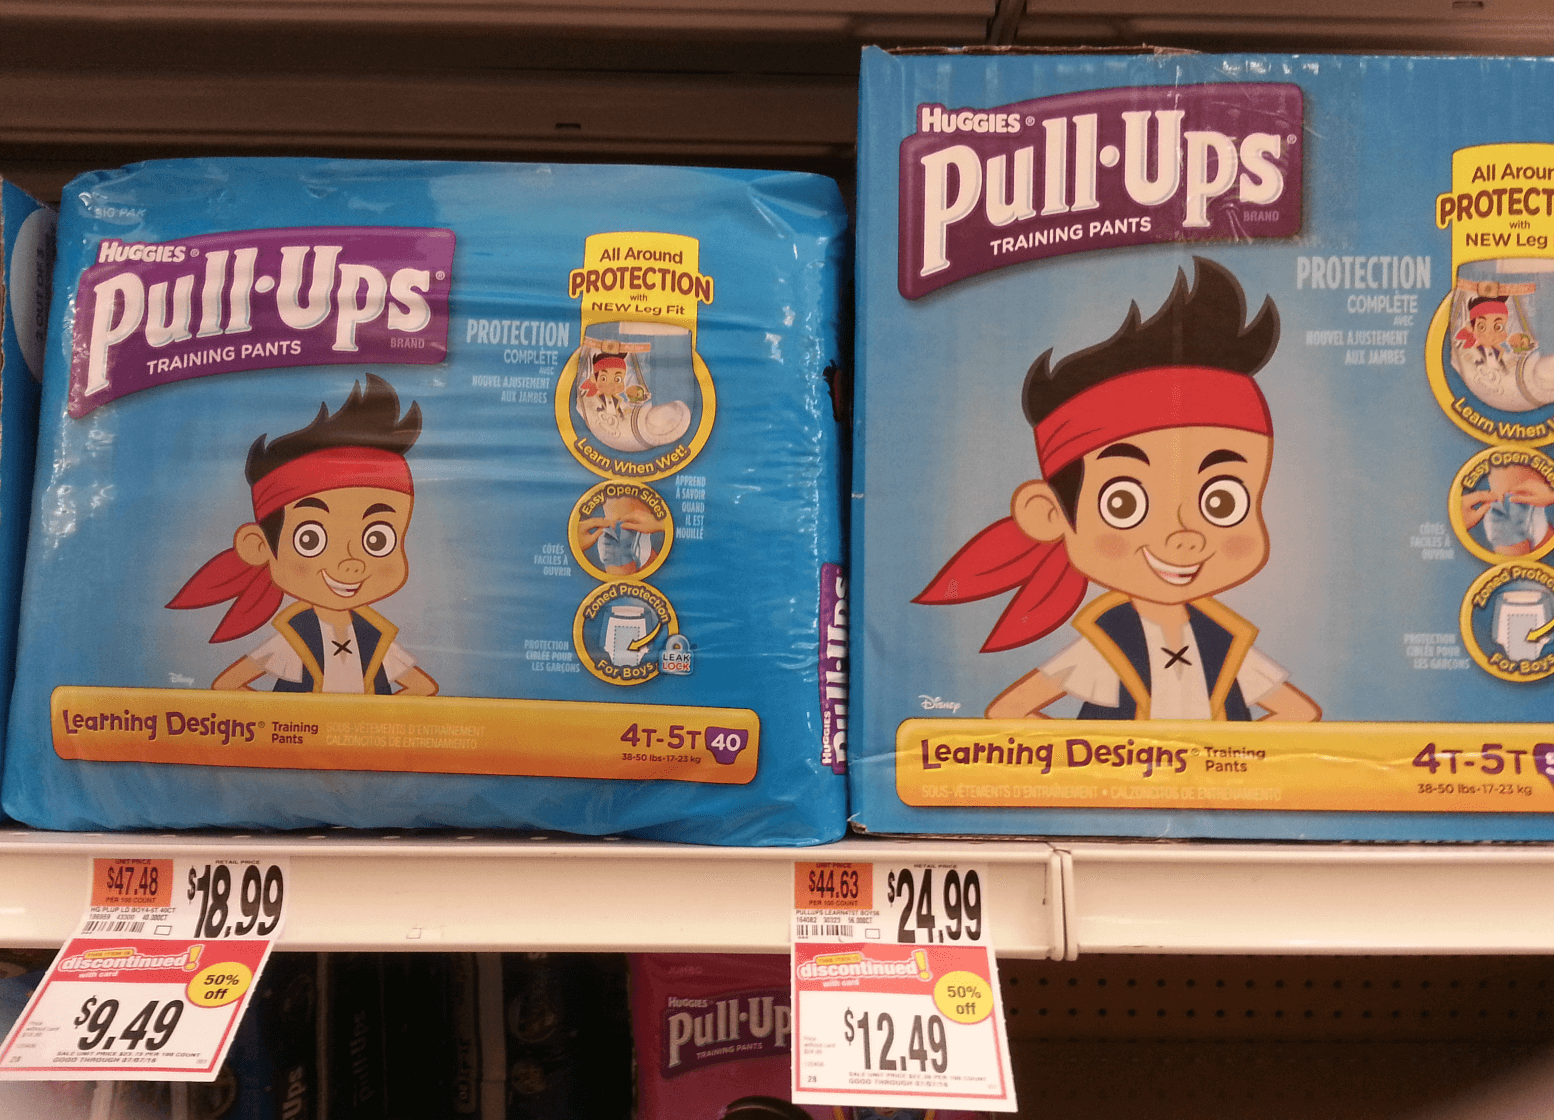  Pull-Ups Coupon